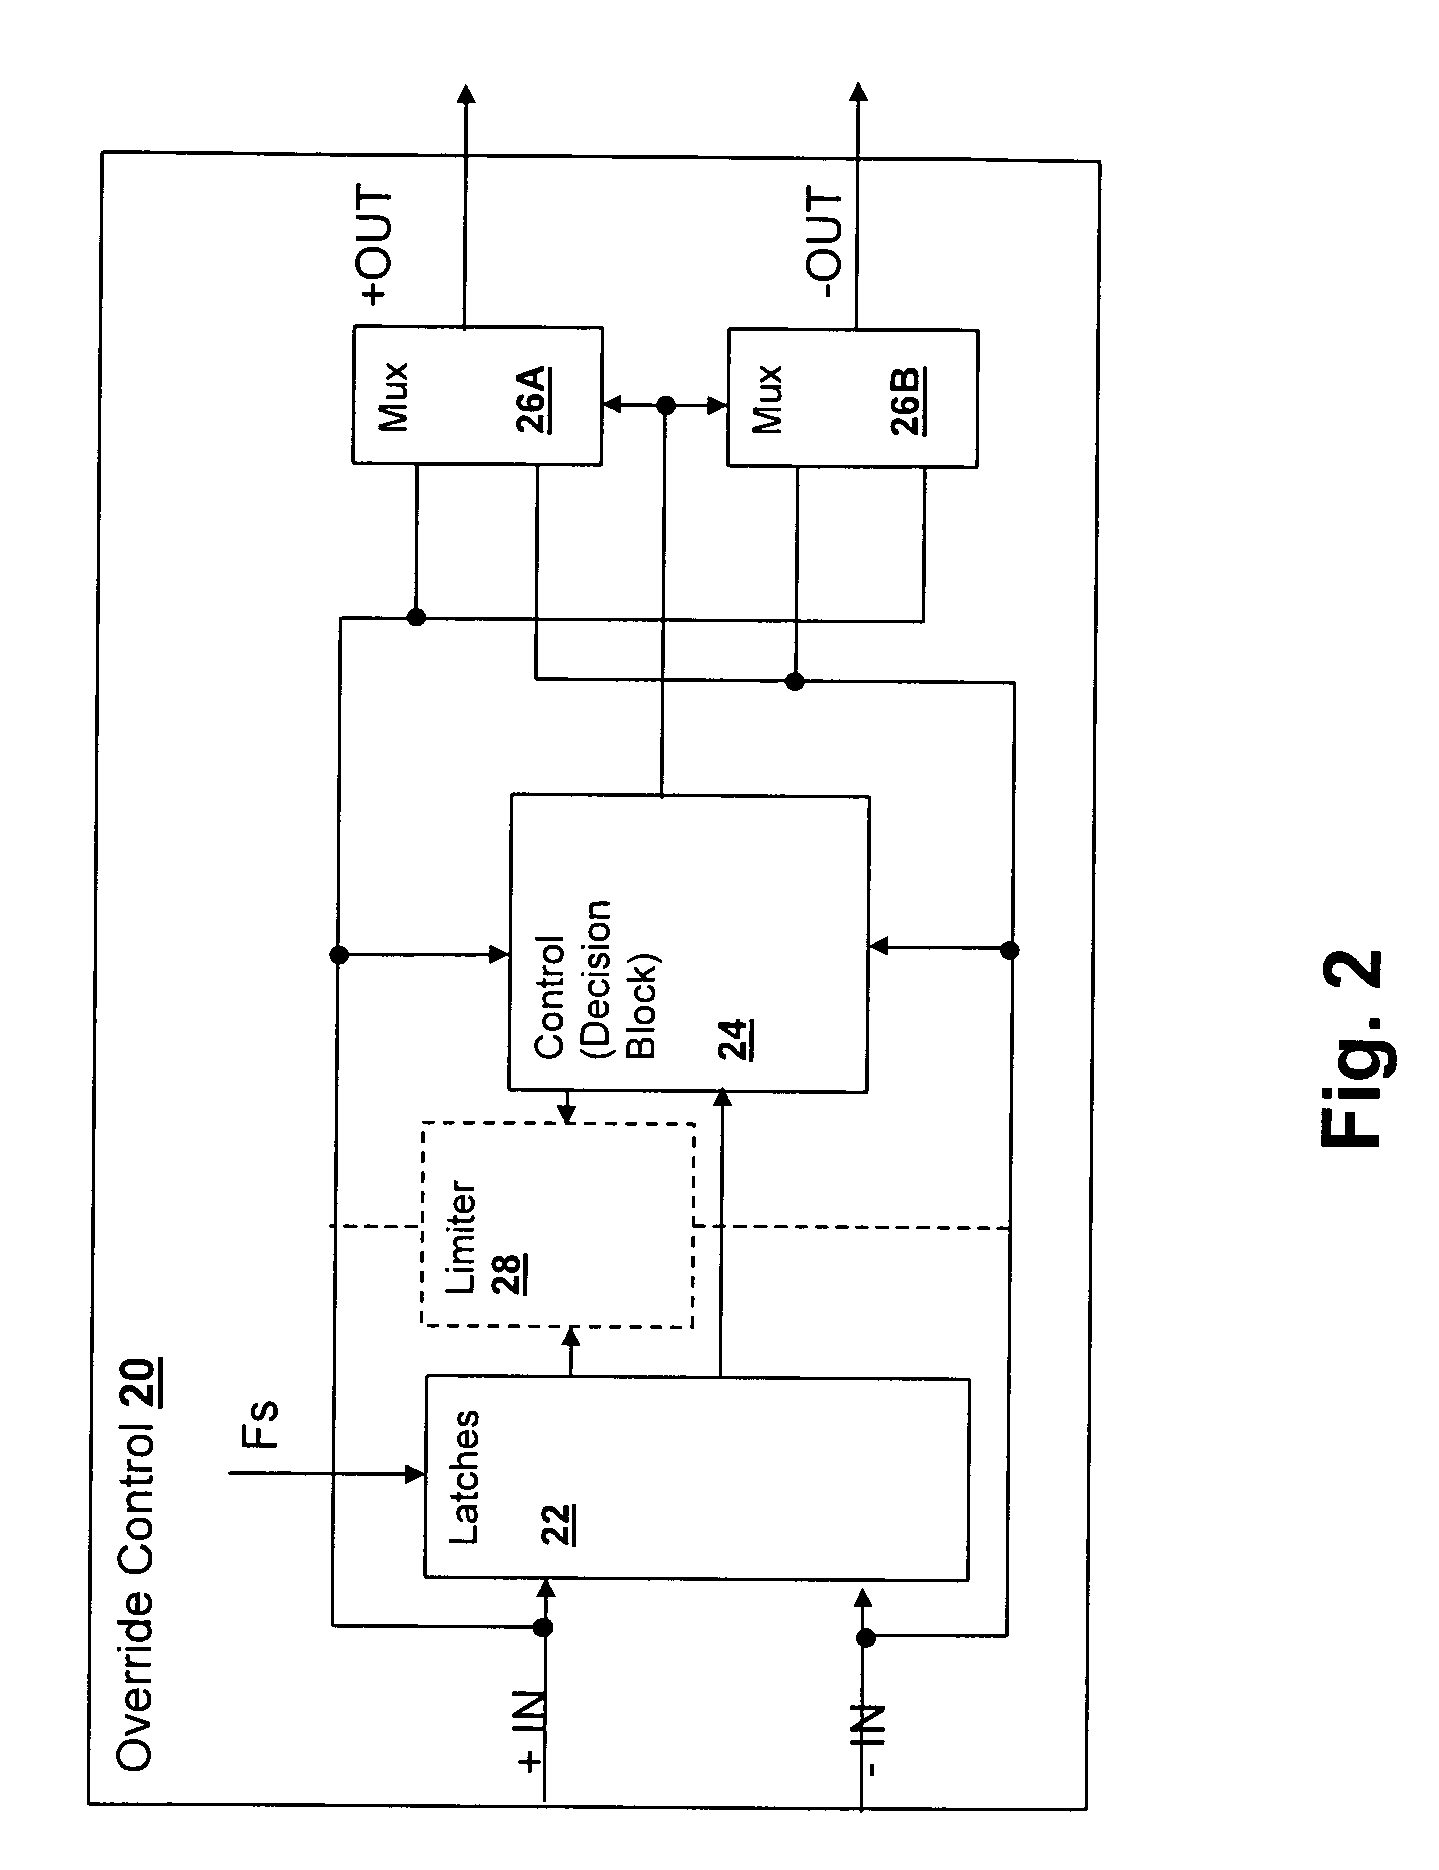 Constant edge-rate ternary output consecutive-edge modulator (CEM) method and apparatus